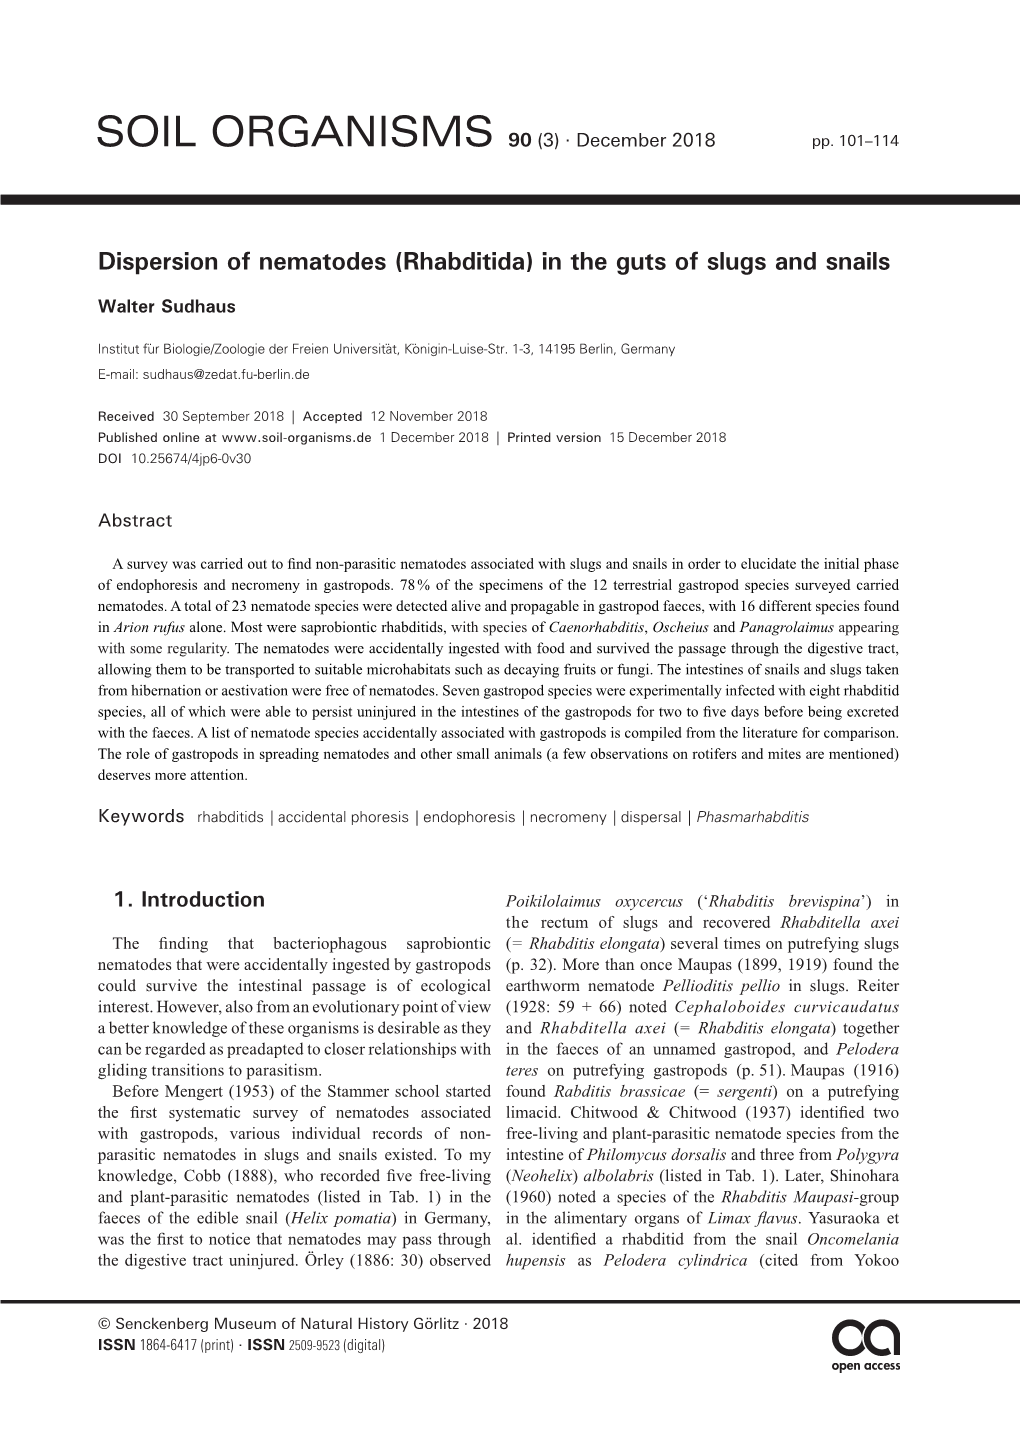 Dispersion of Nematodes (Rhabditida) in the Guts of Slugs and Snails